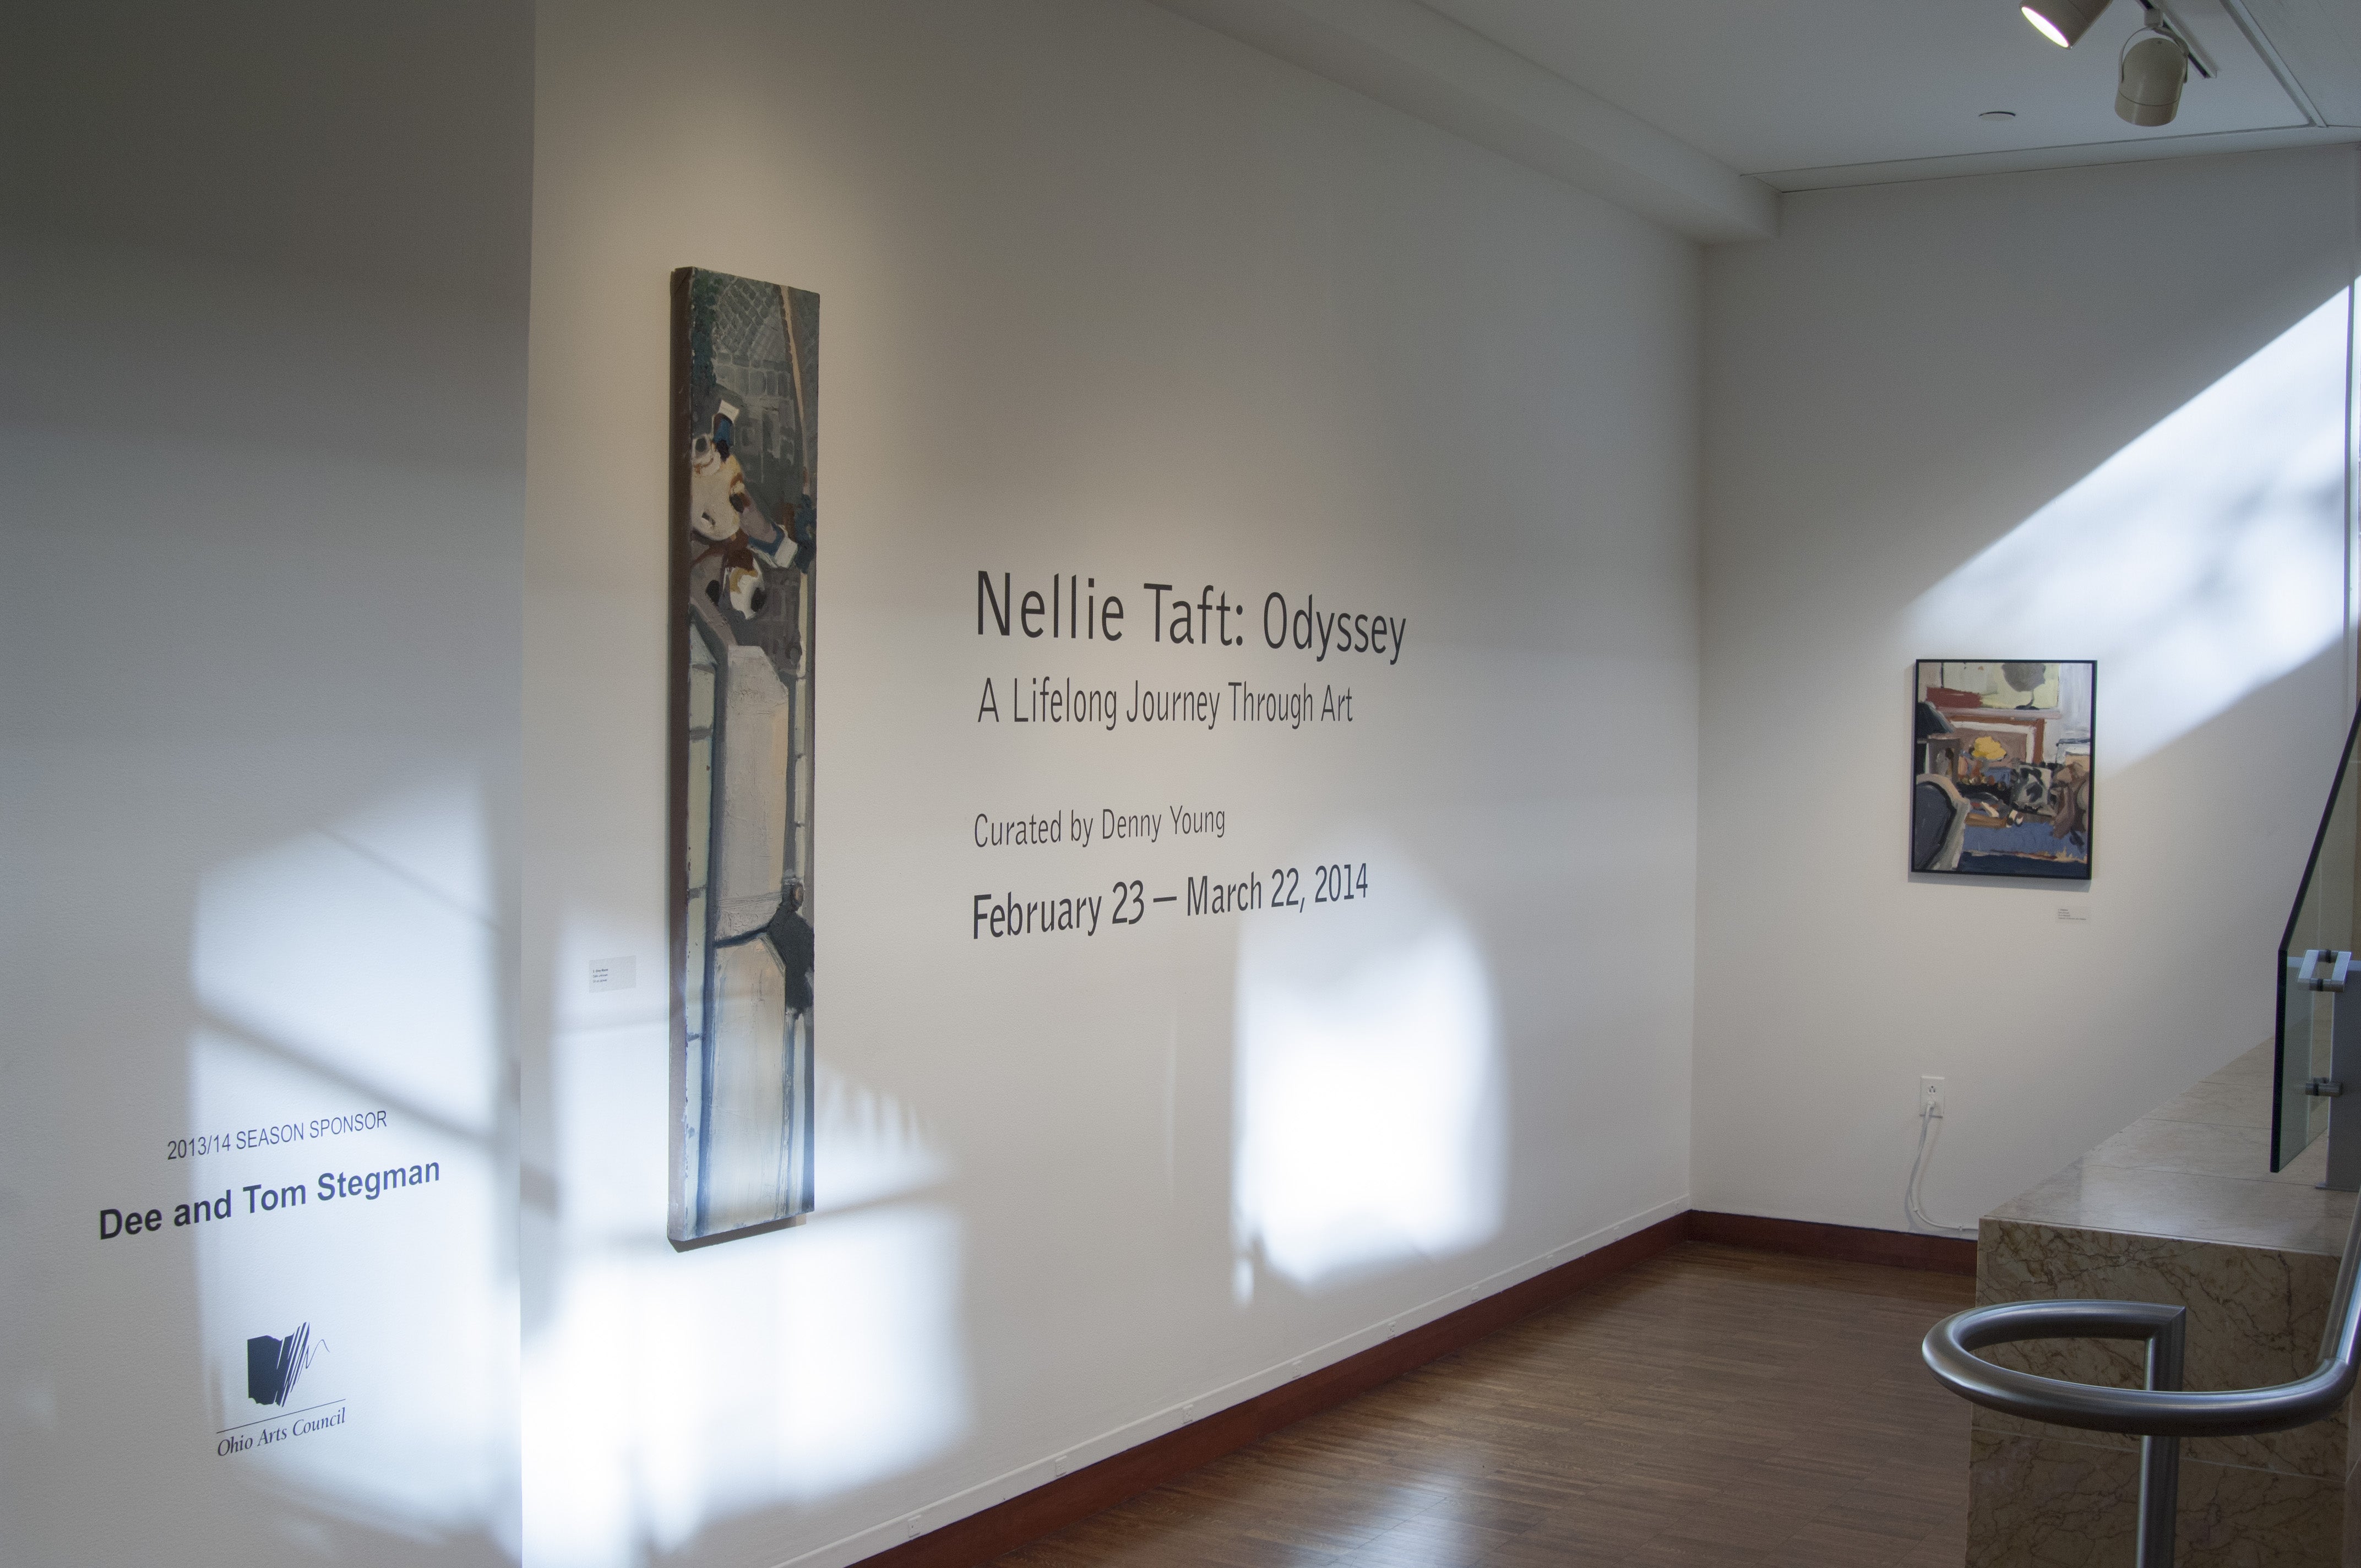 Nellie Taft: Odyssey, A Lifelong Journey through Art